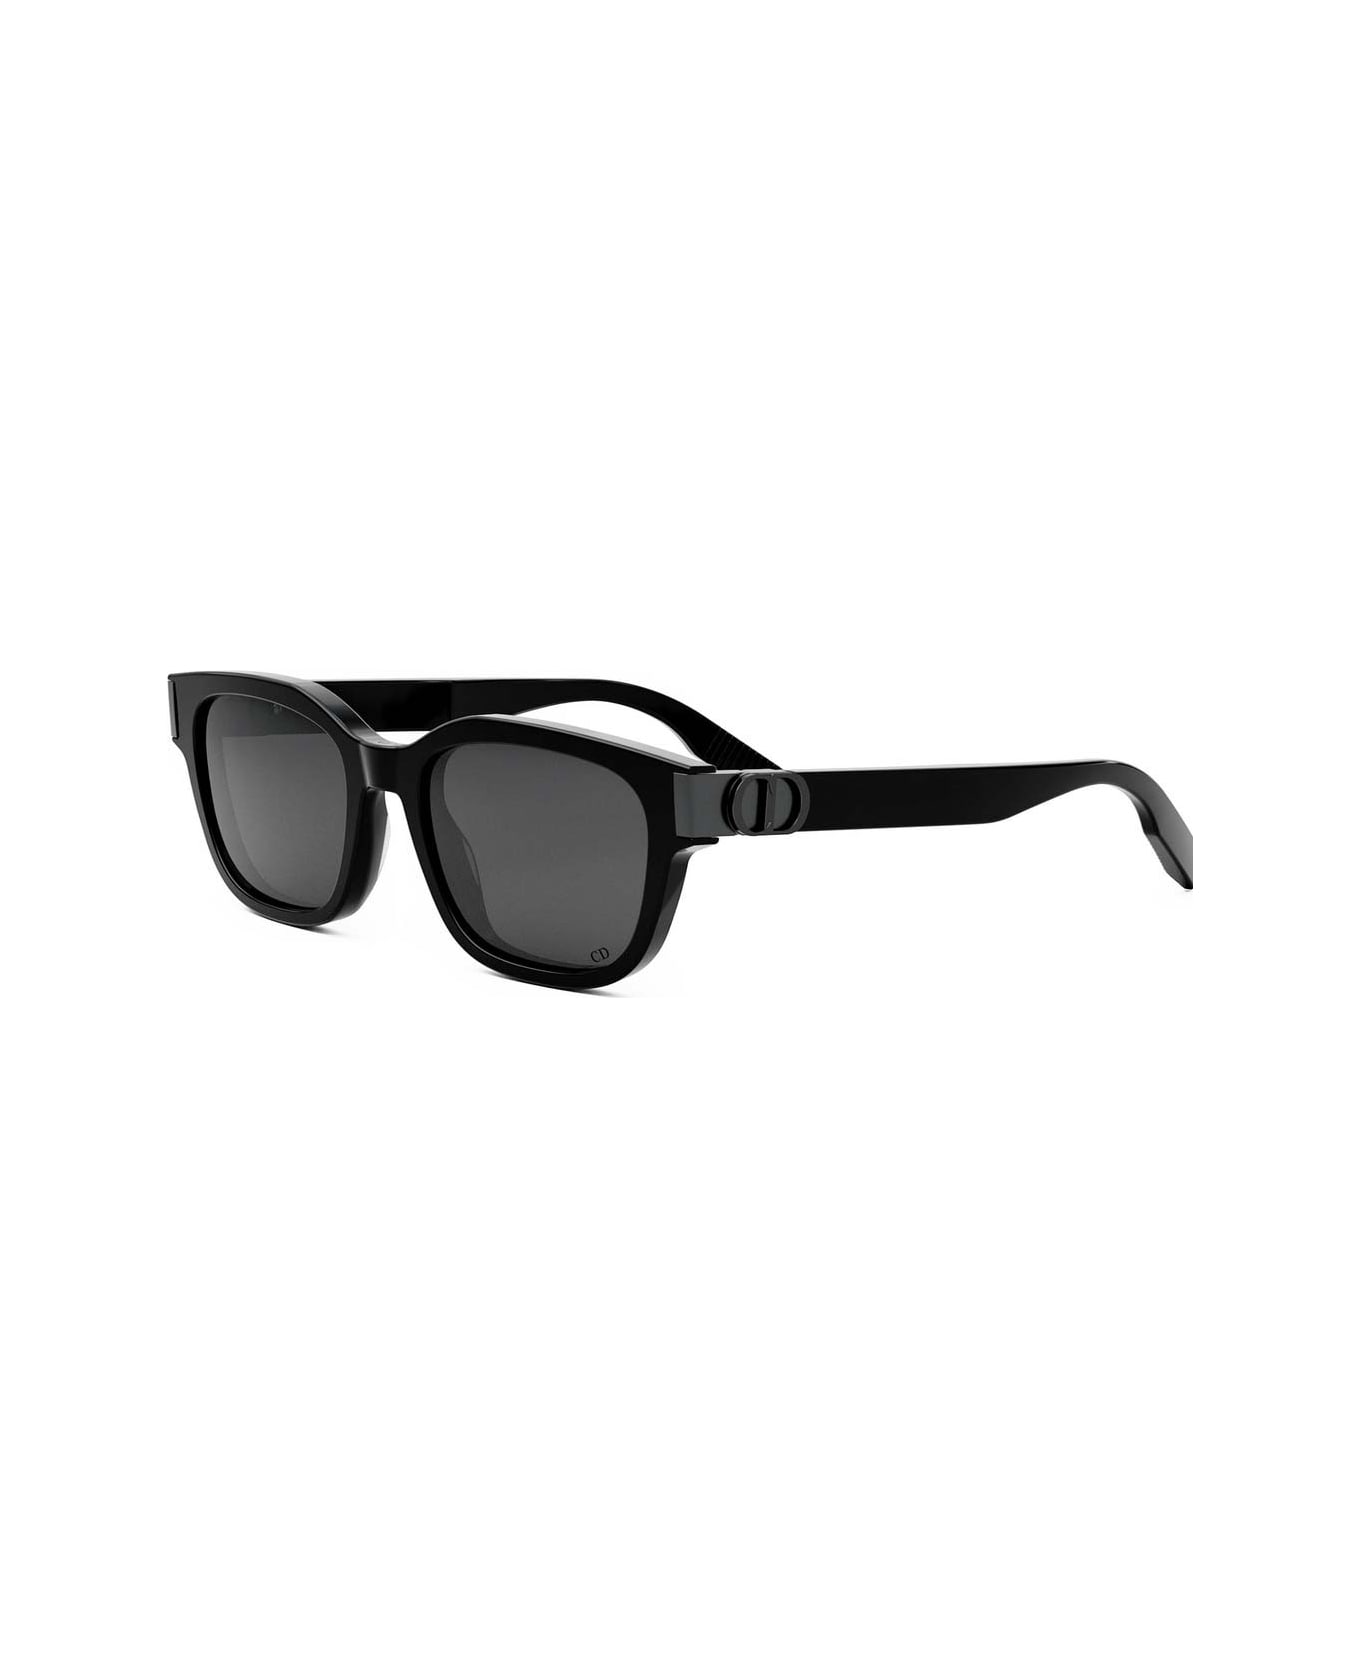 Dior Eyewear Sunglasses - Nero/Grigio